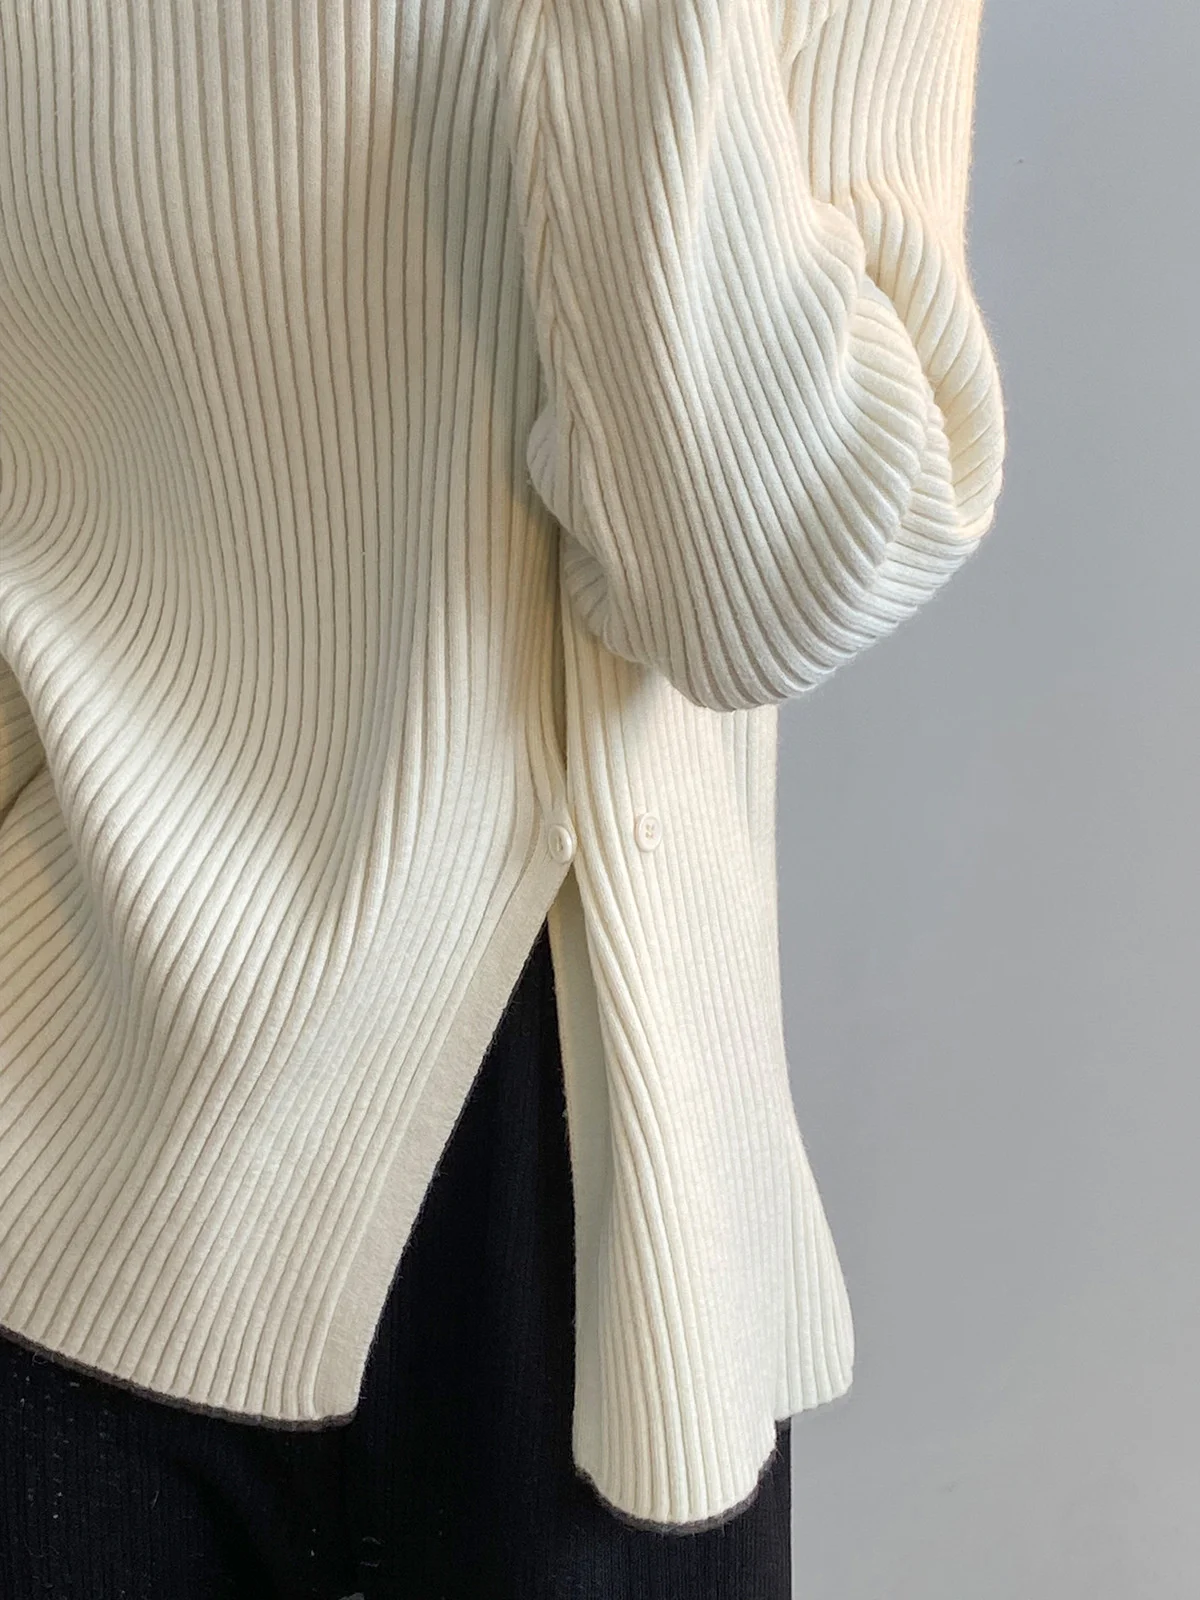 Sba799f7b918f4887a3277c706e32c6a3h - Winter Korean Stand Collar Long Sleeves Split Solid Sweater